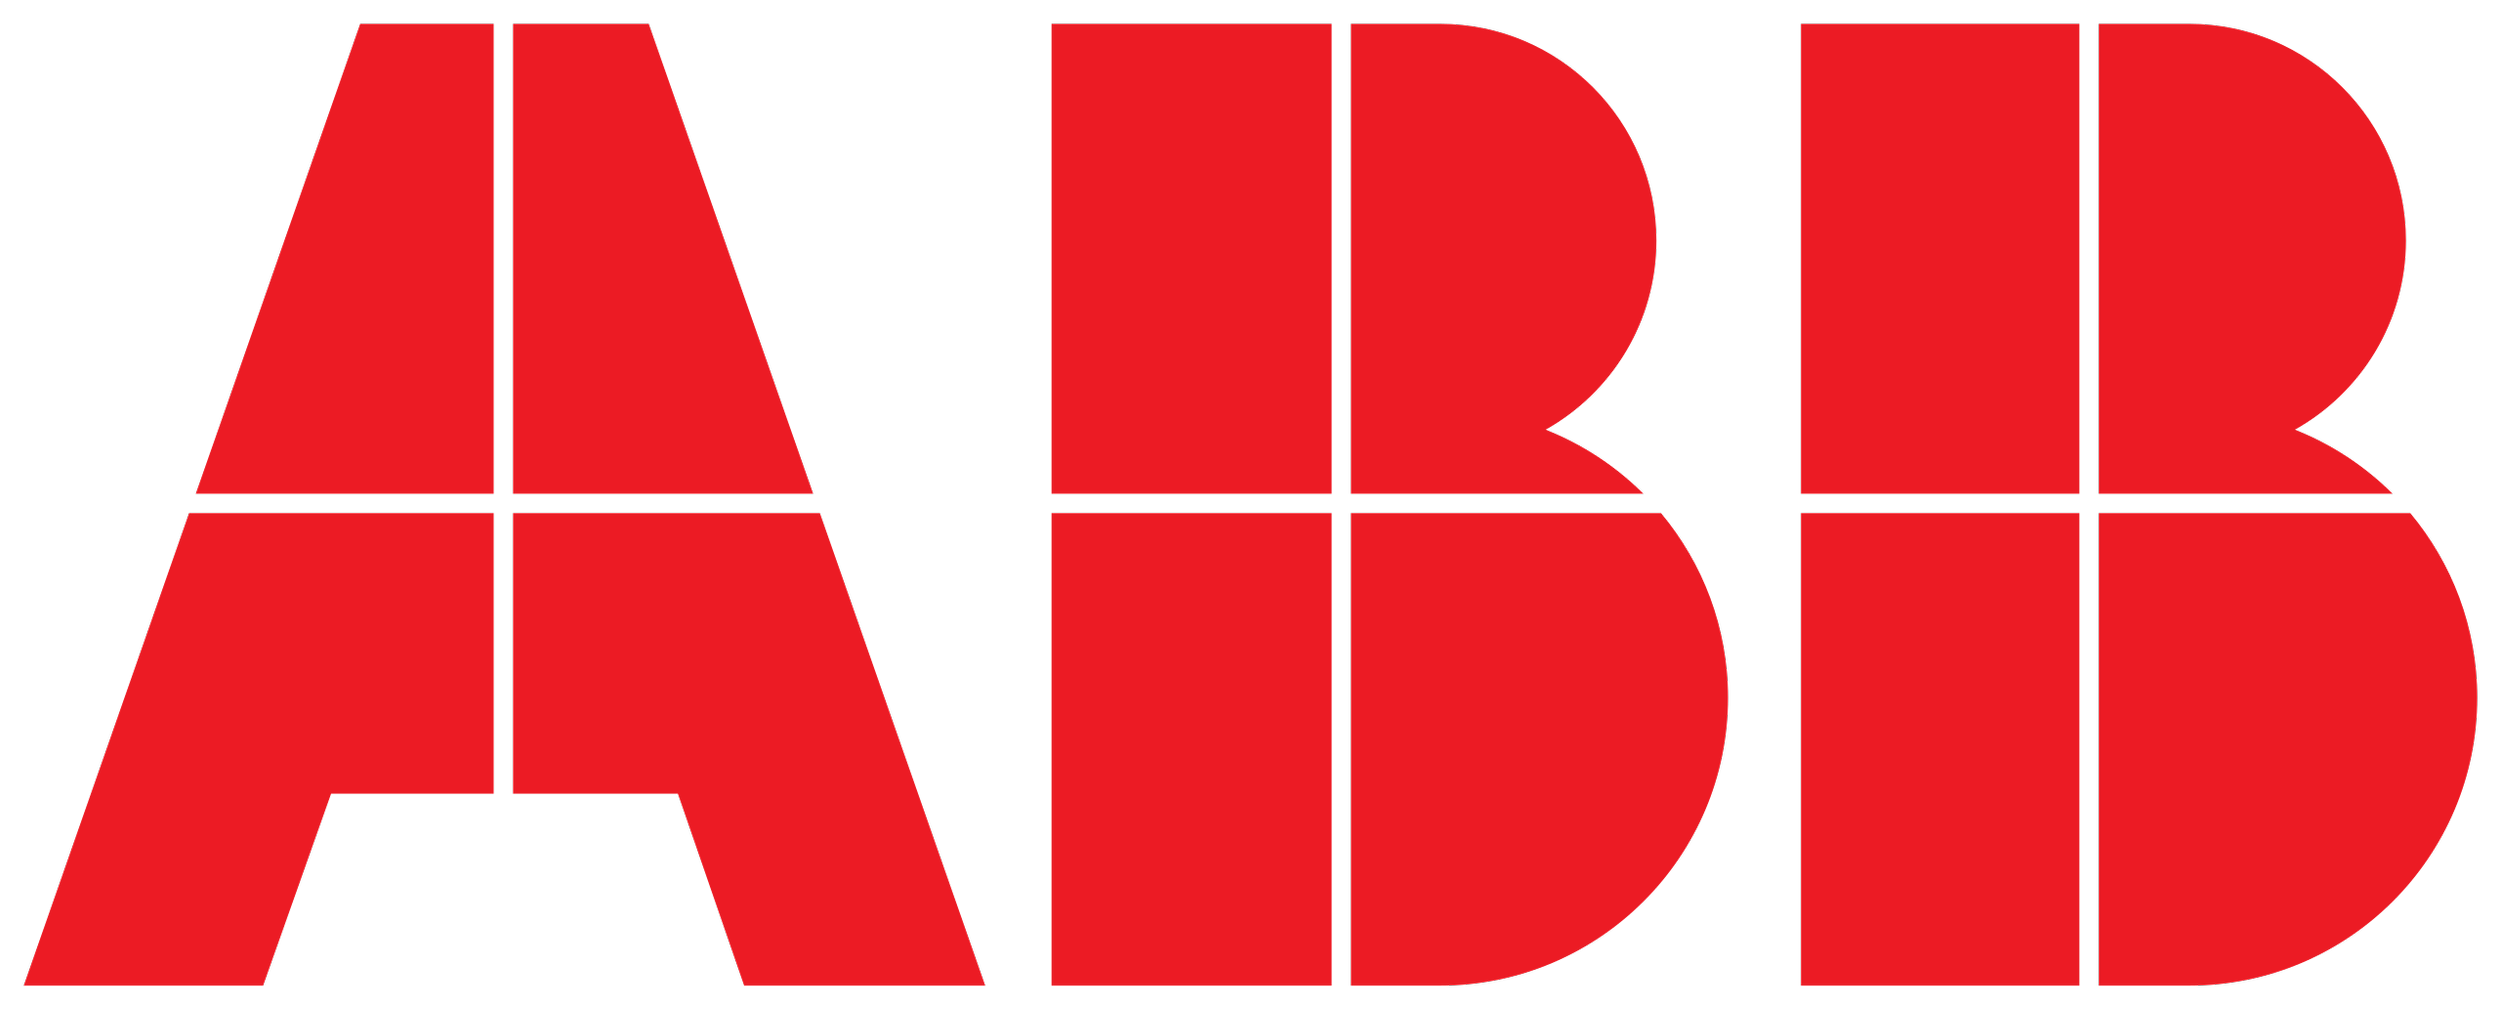 ABB logo.svg.png